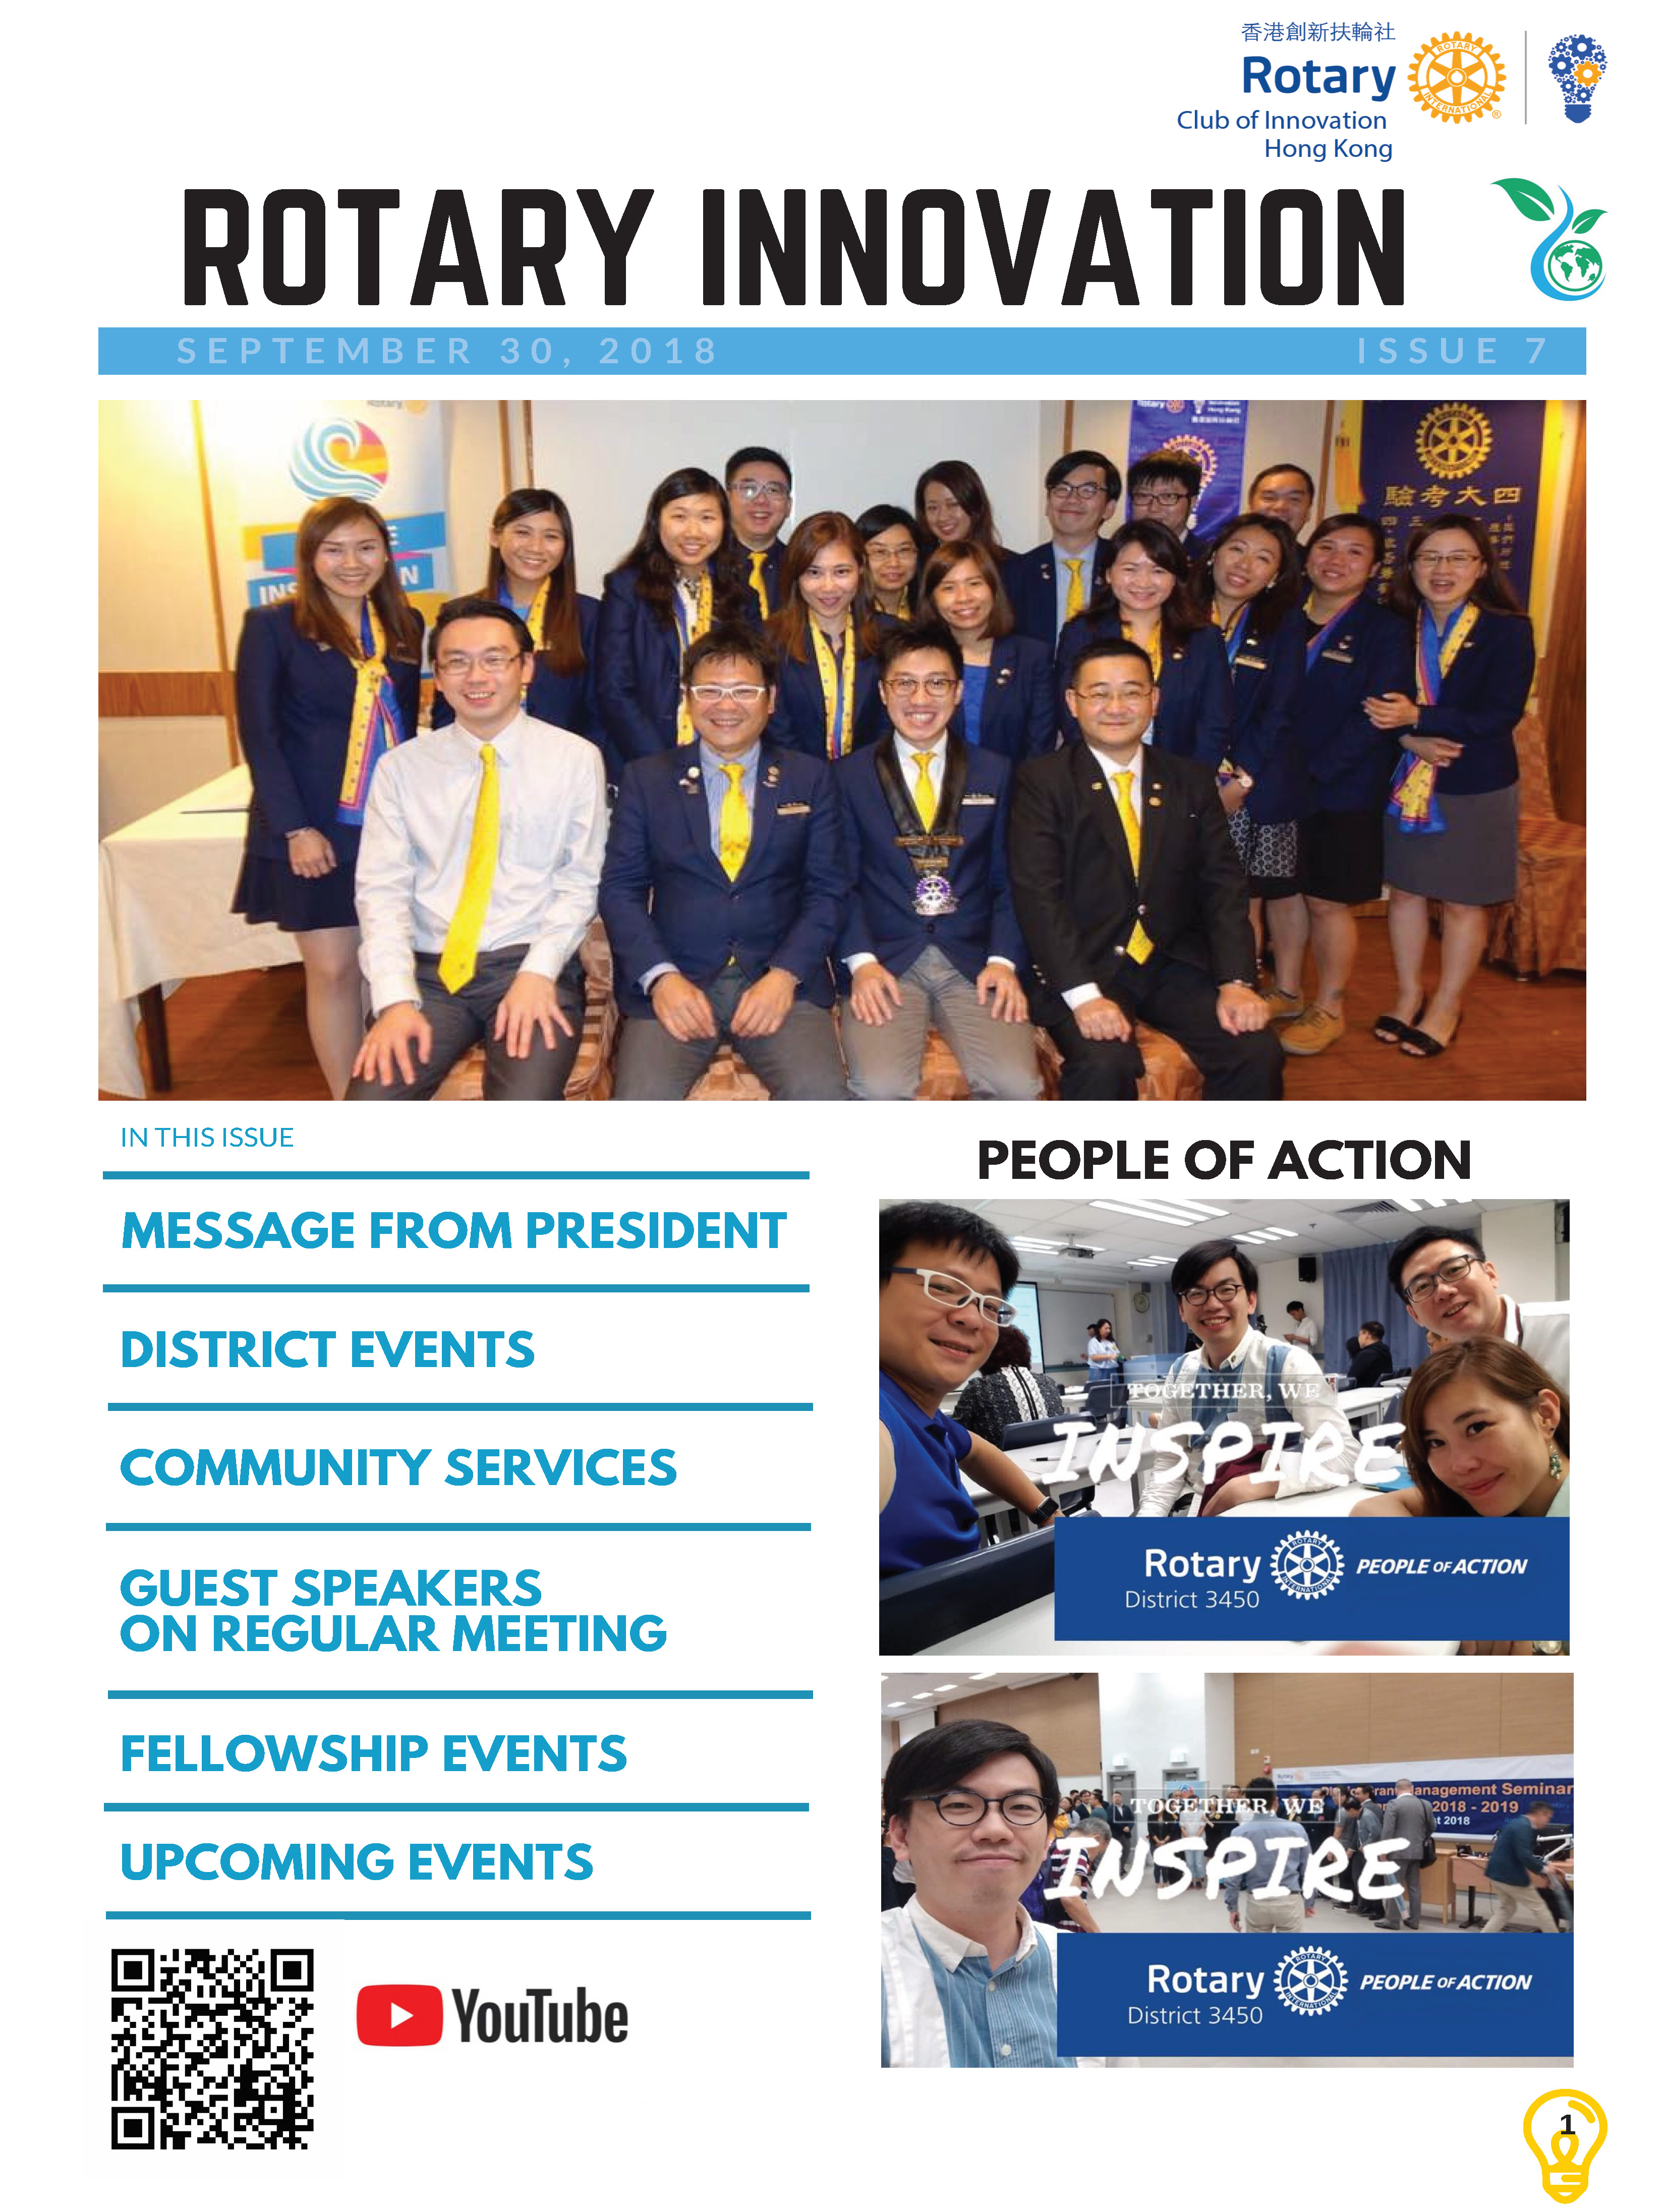 Rotary Innovation Newsletter Issue 7